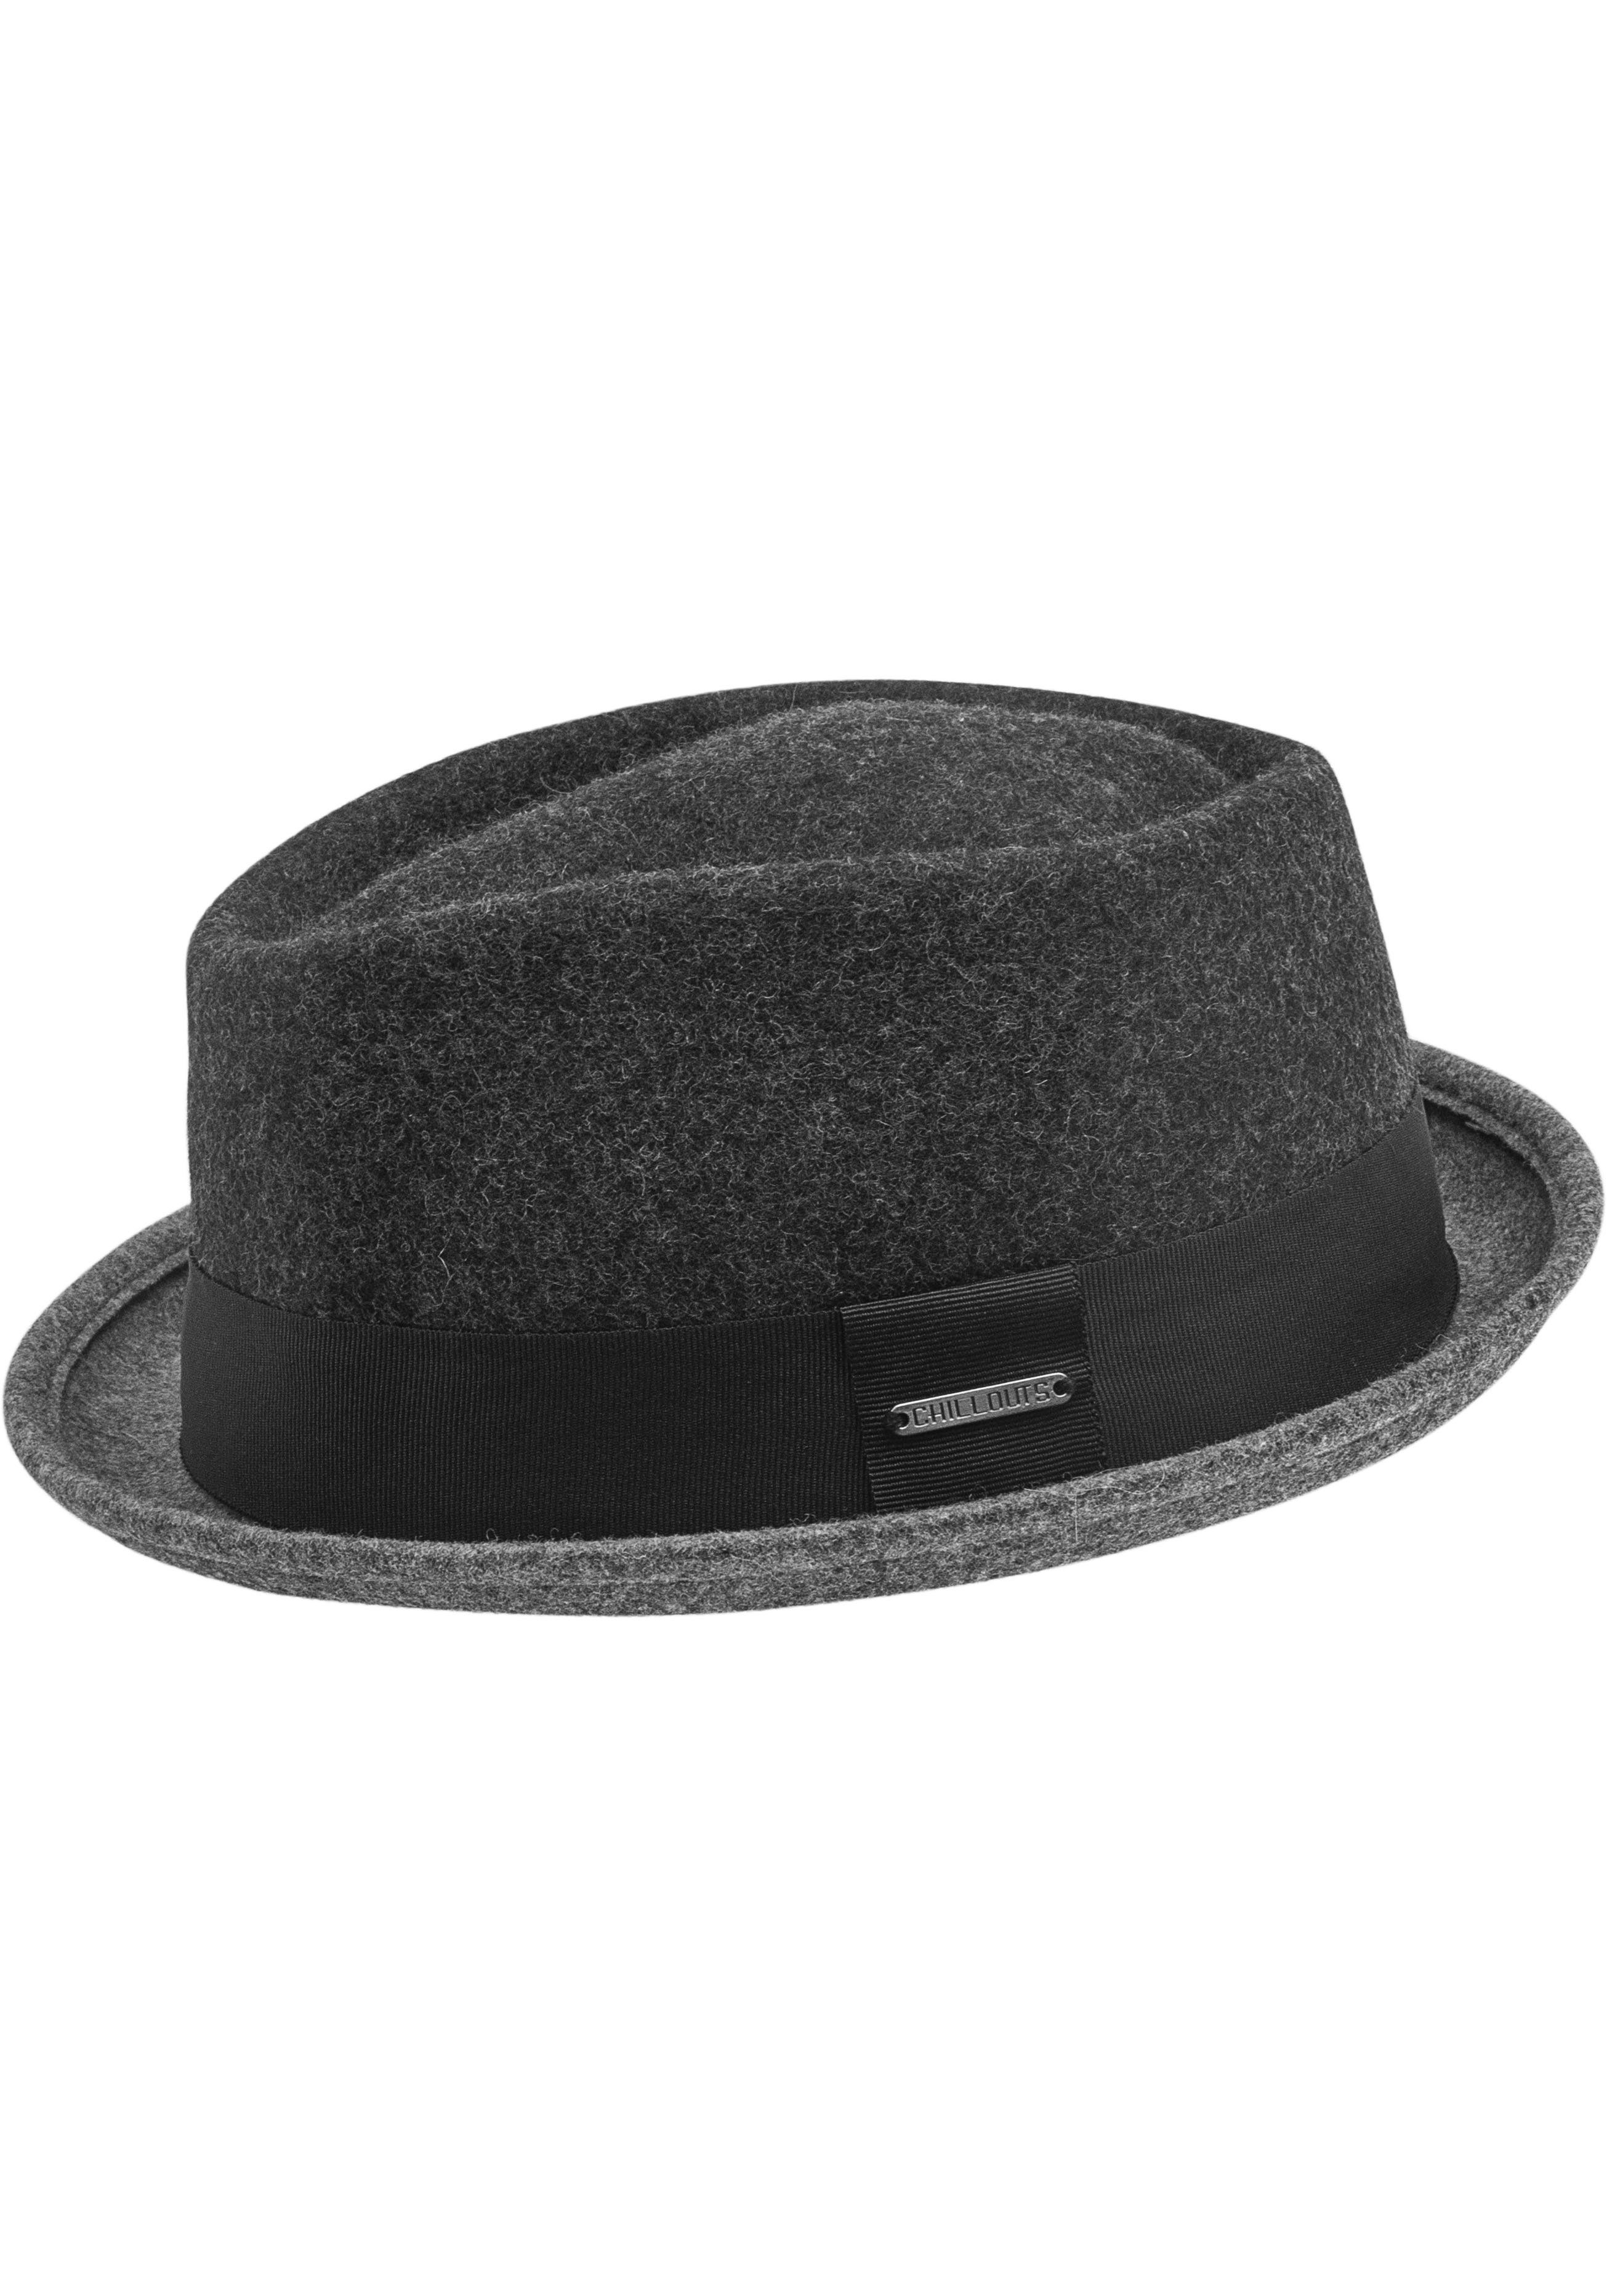 chillouts Filzhut dark grey Neal Hat